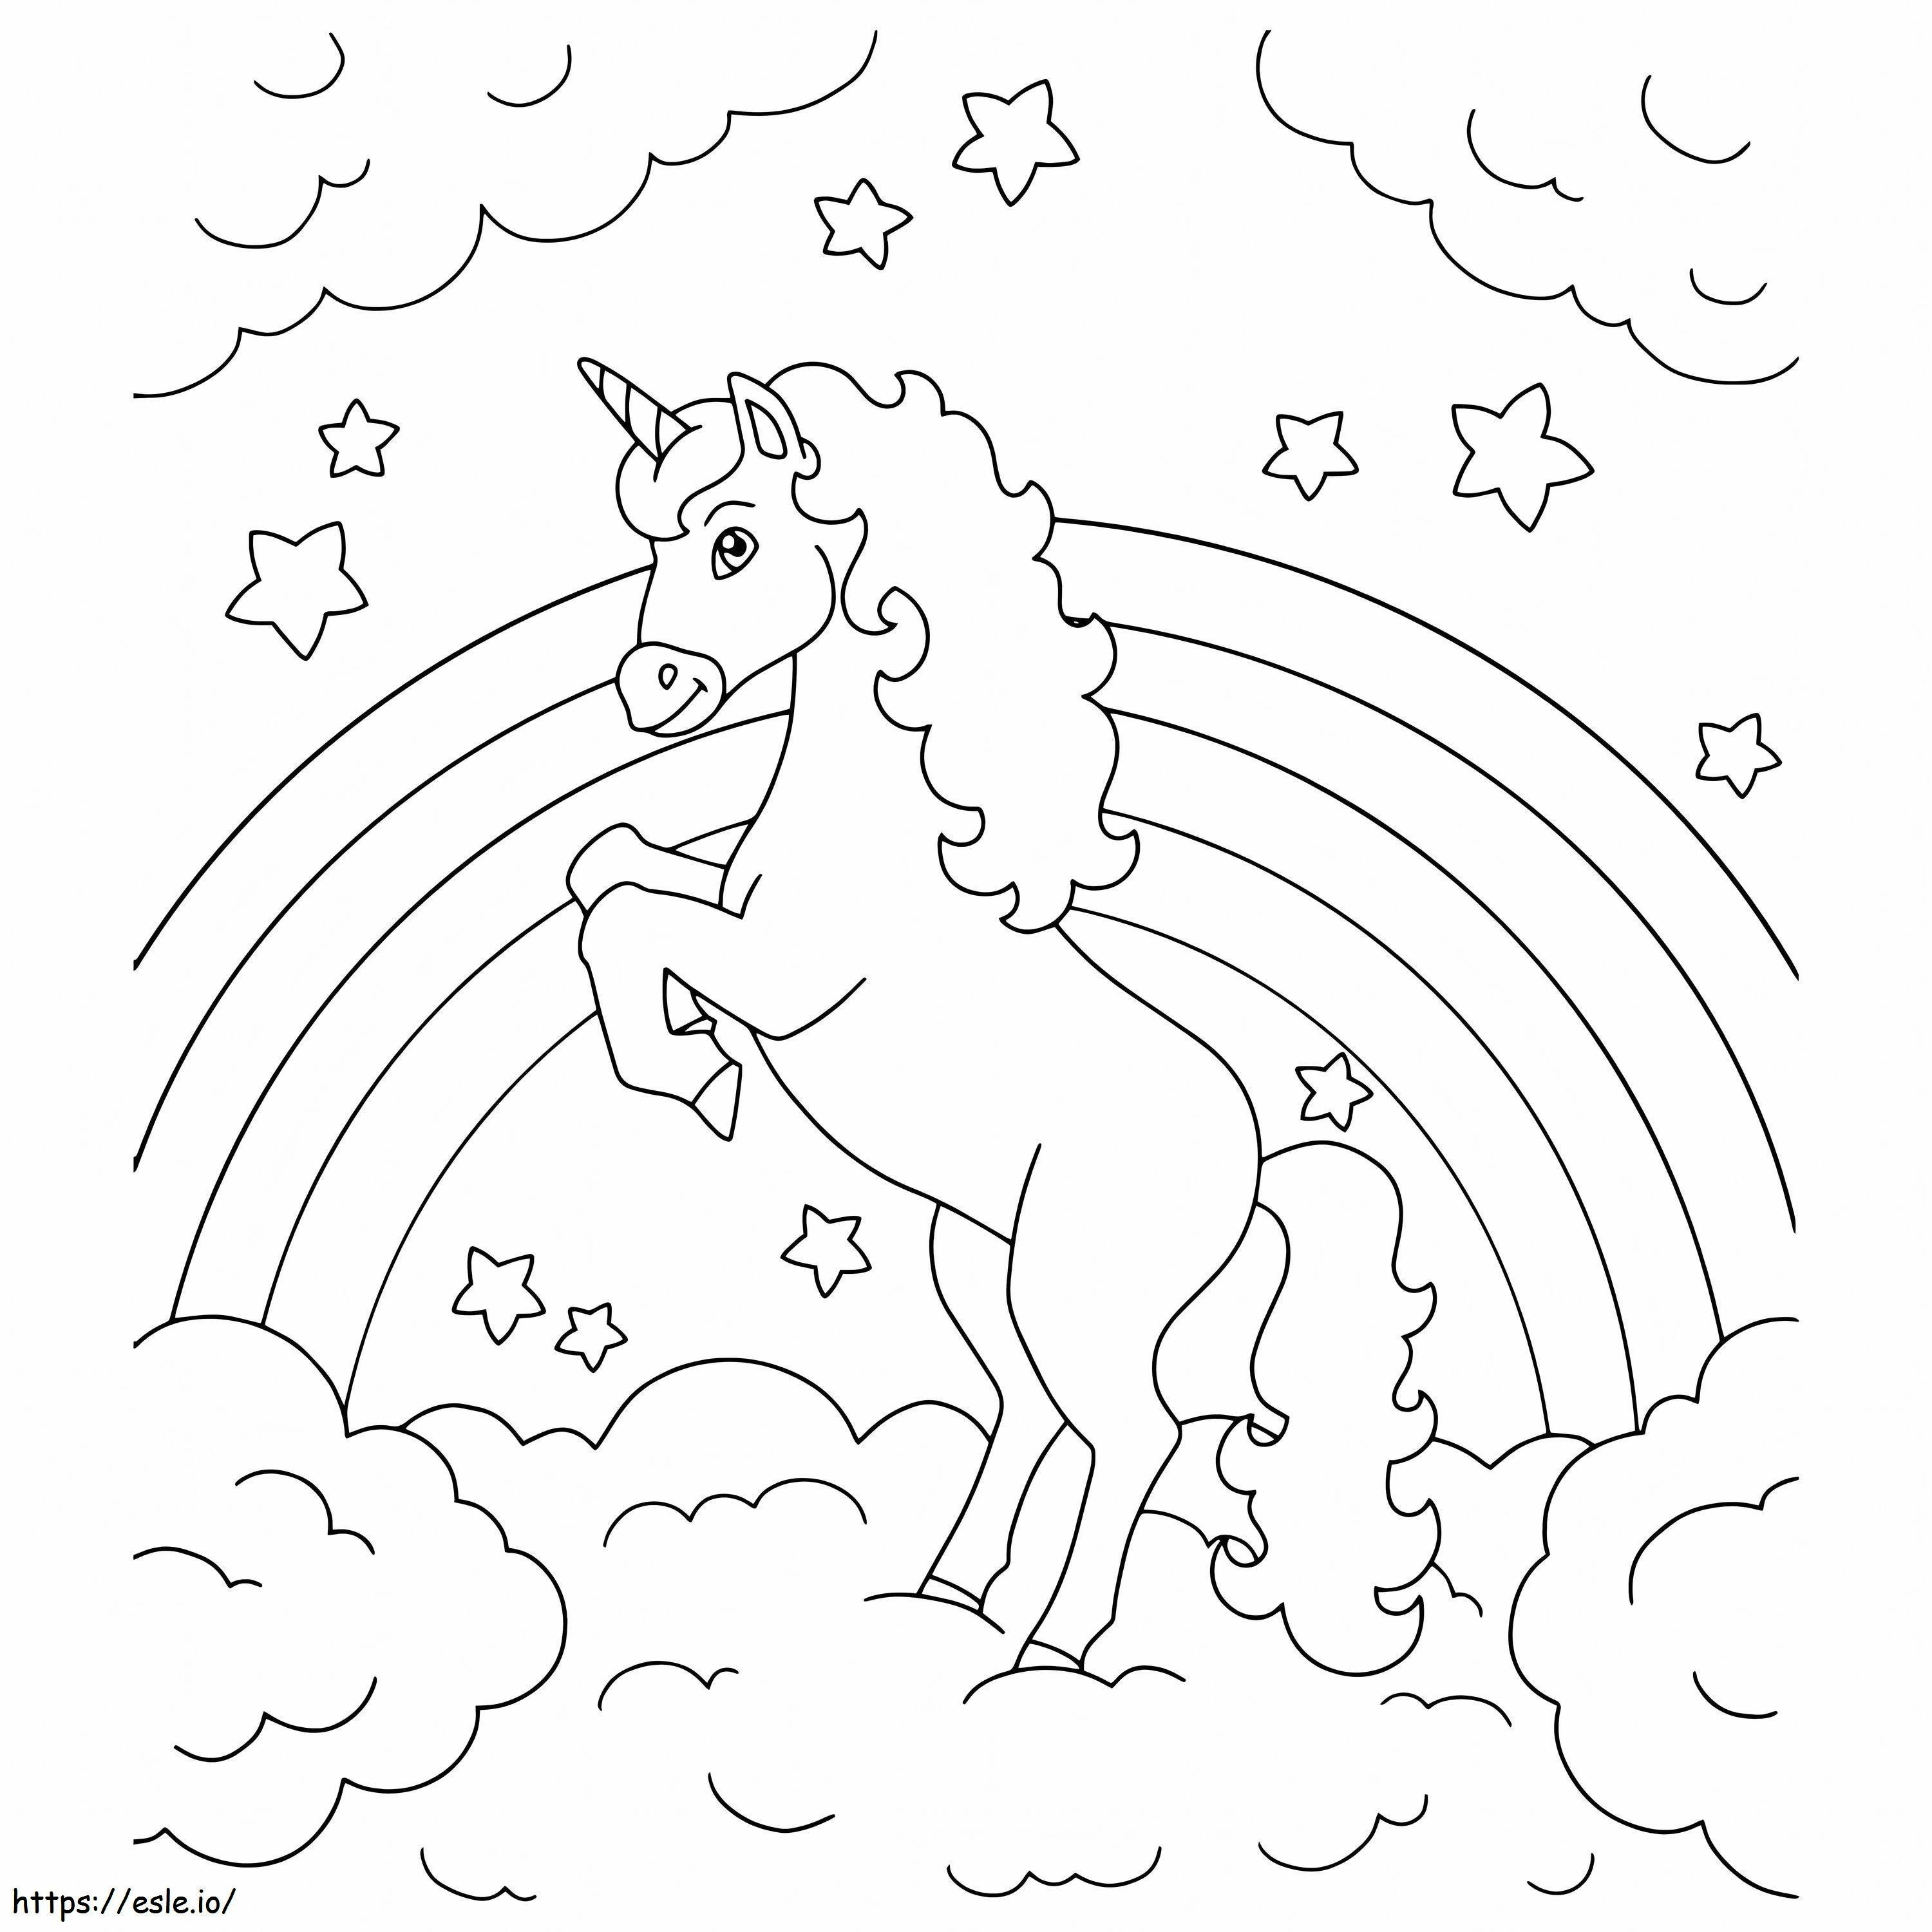 Unicornio salta sobre una nube para colorear